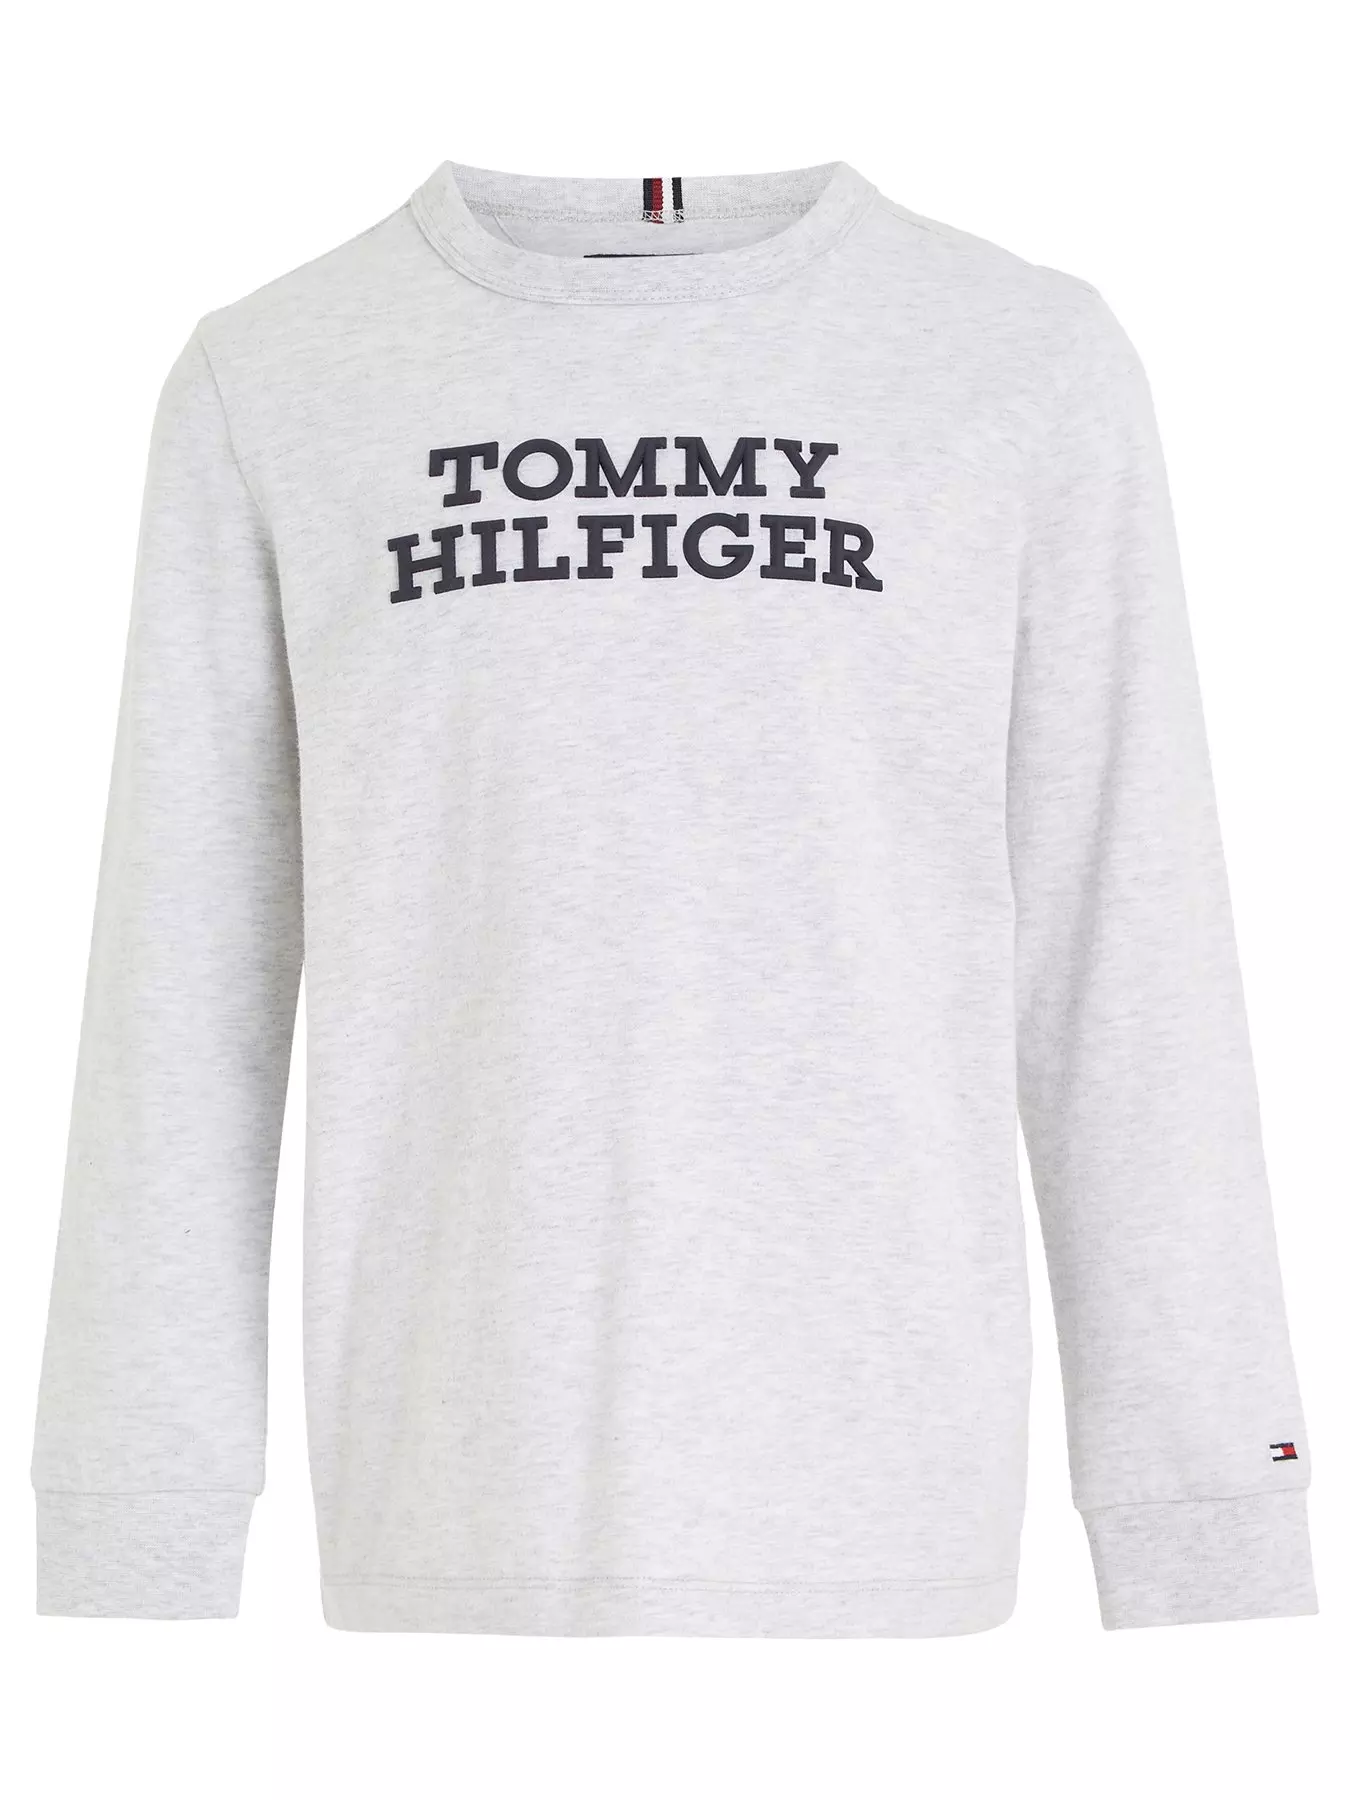 Tommy Hilfiger - Teen Boys Navy Blue Monogram Sweater